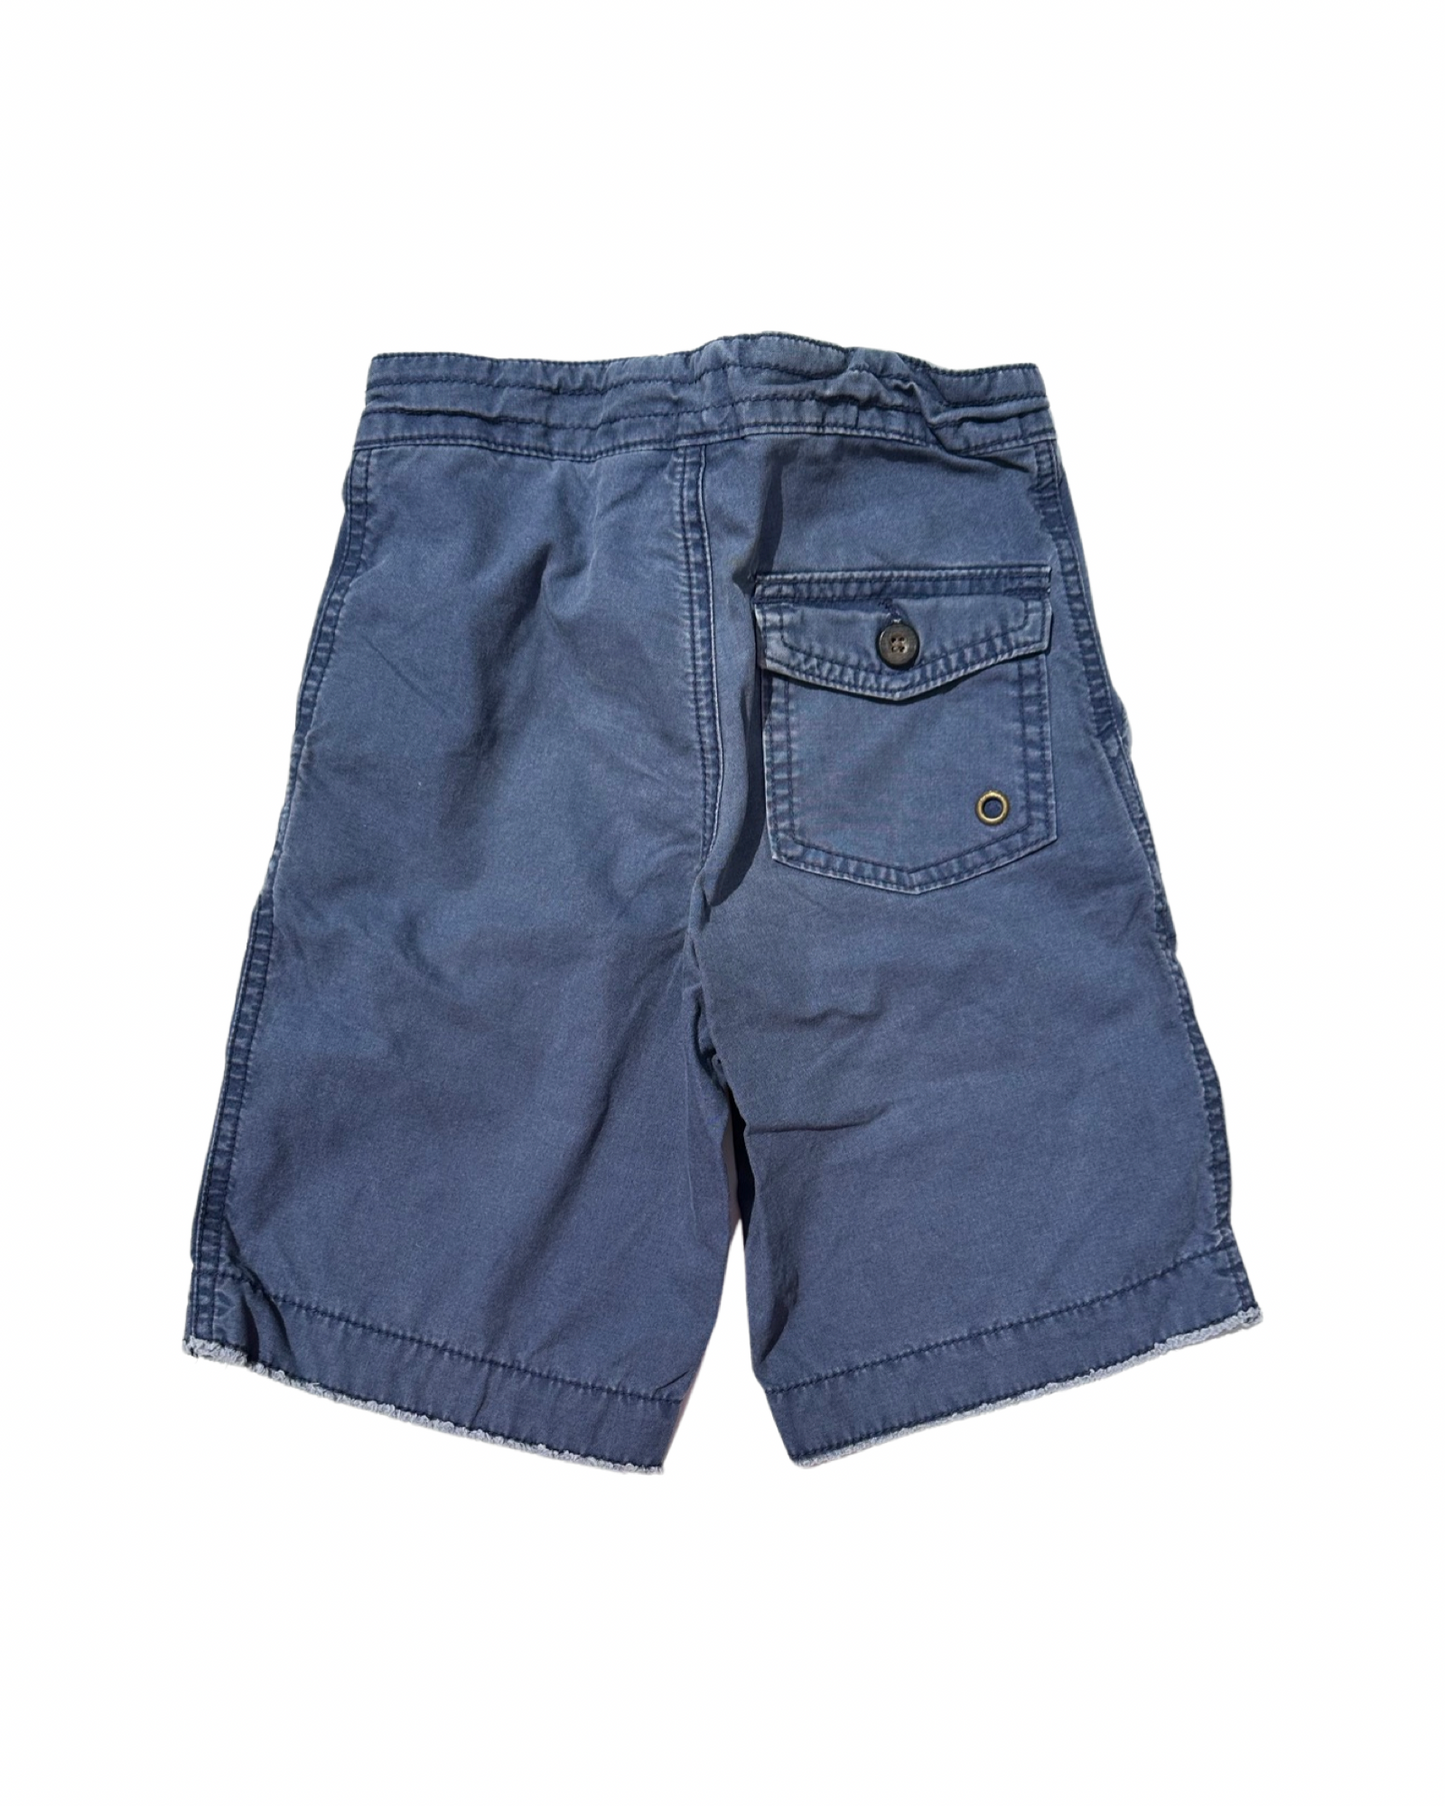 Gap Kids washed navy shorts (size 5-6yrs)